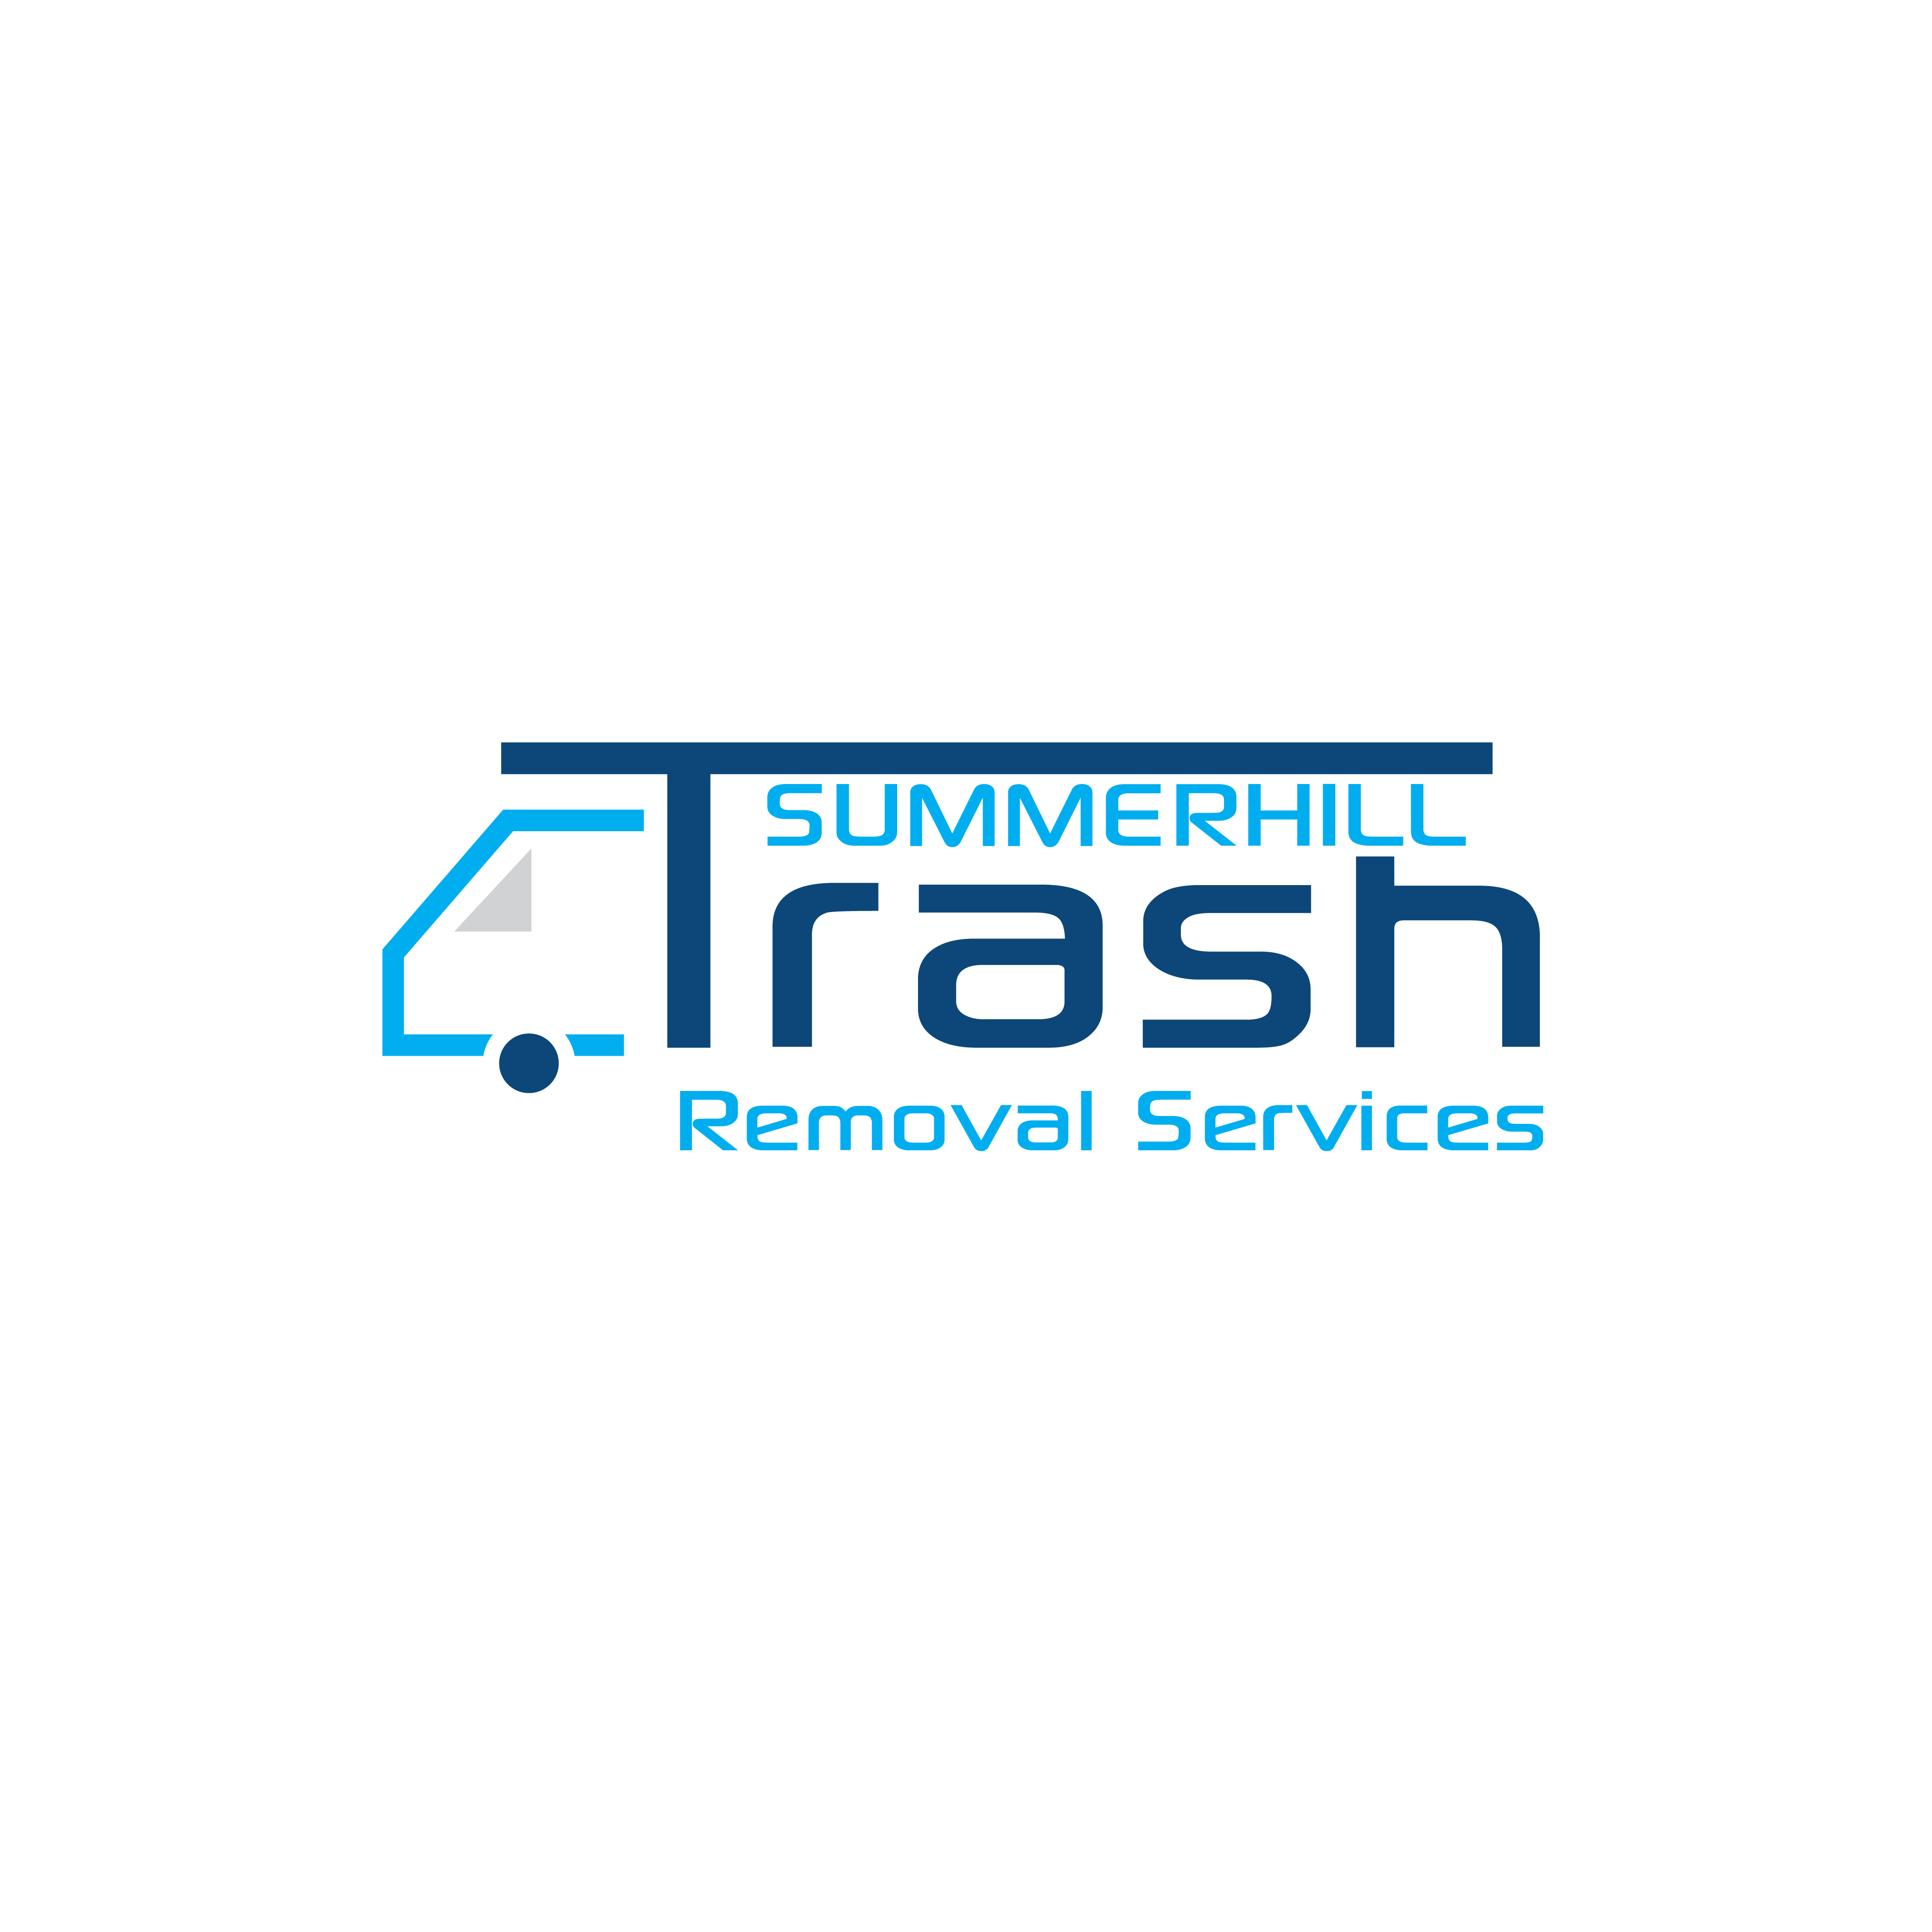 Summerhill Trash Removal Services Logo